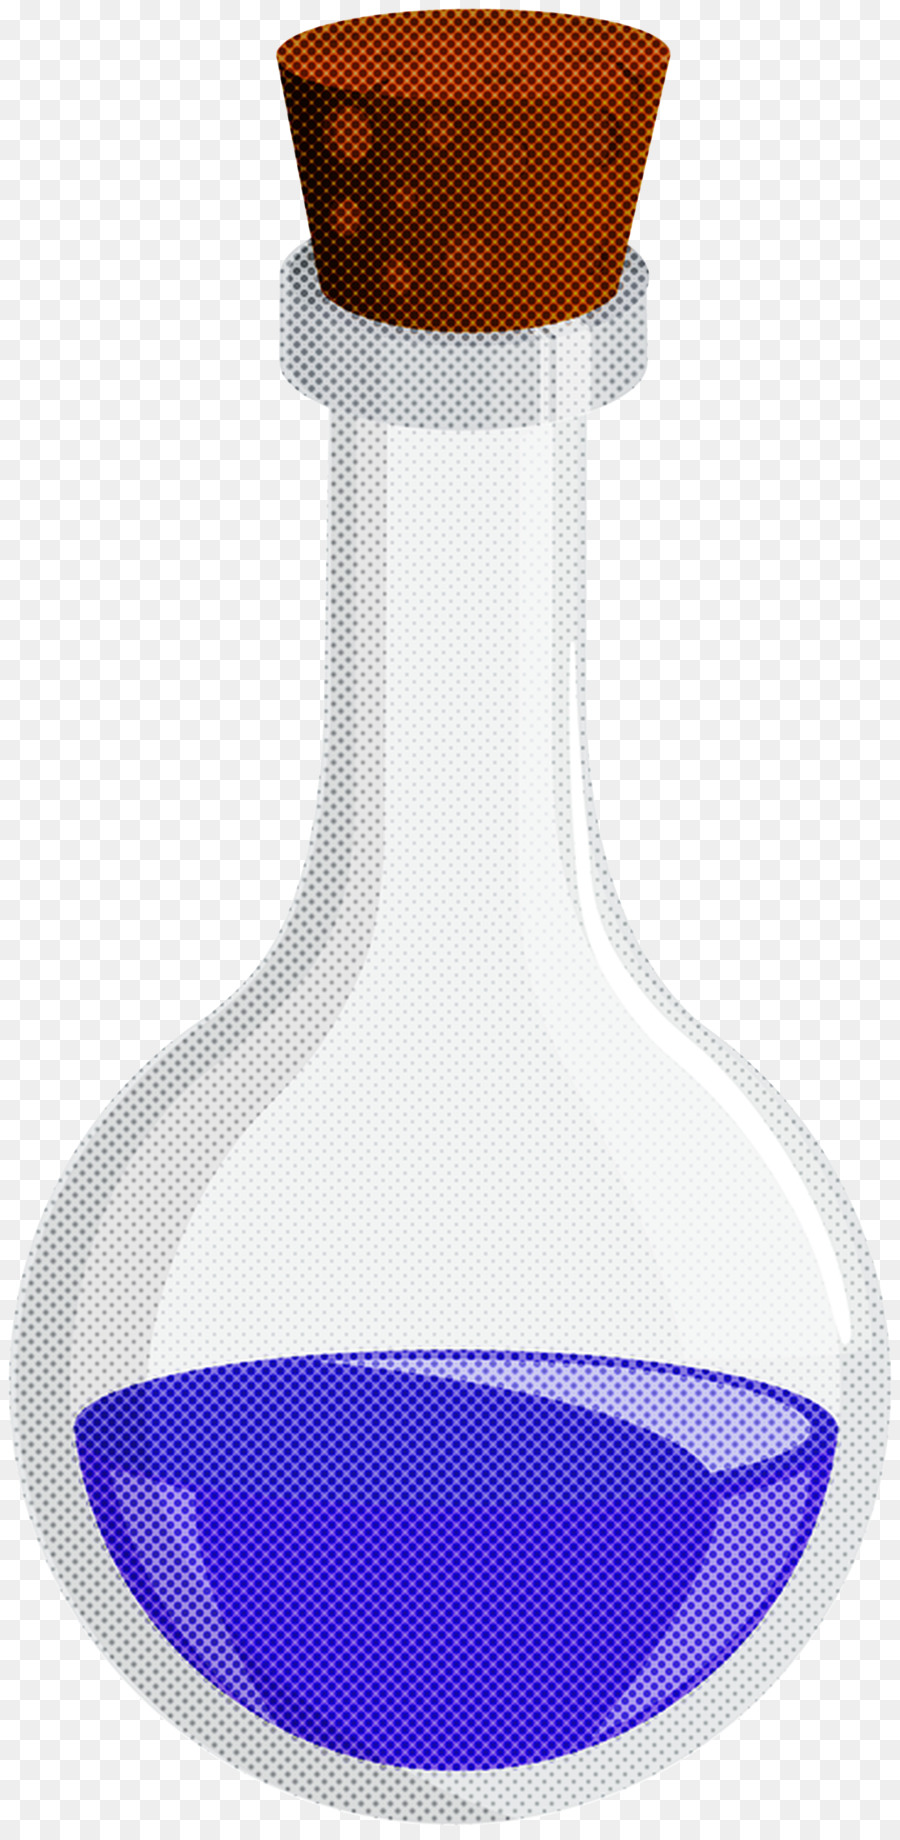 laboratory flask bottle flask glass bottle barware